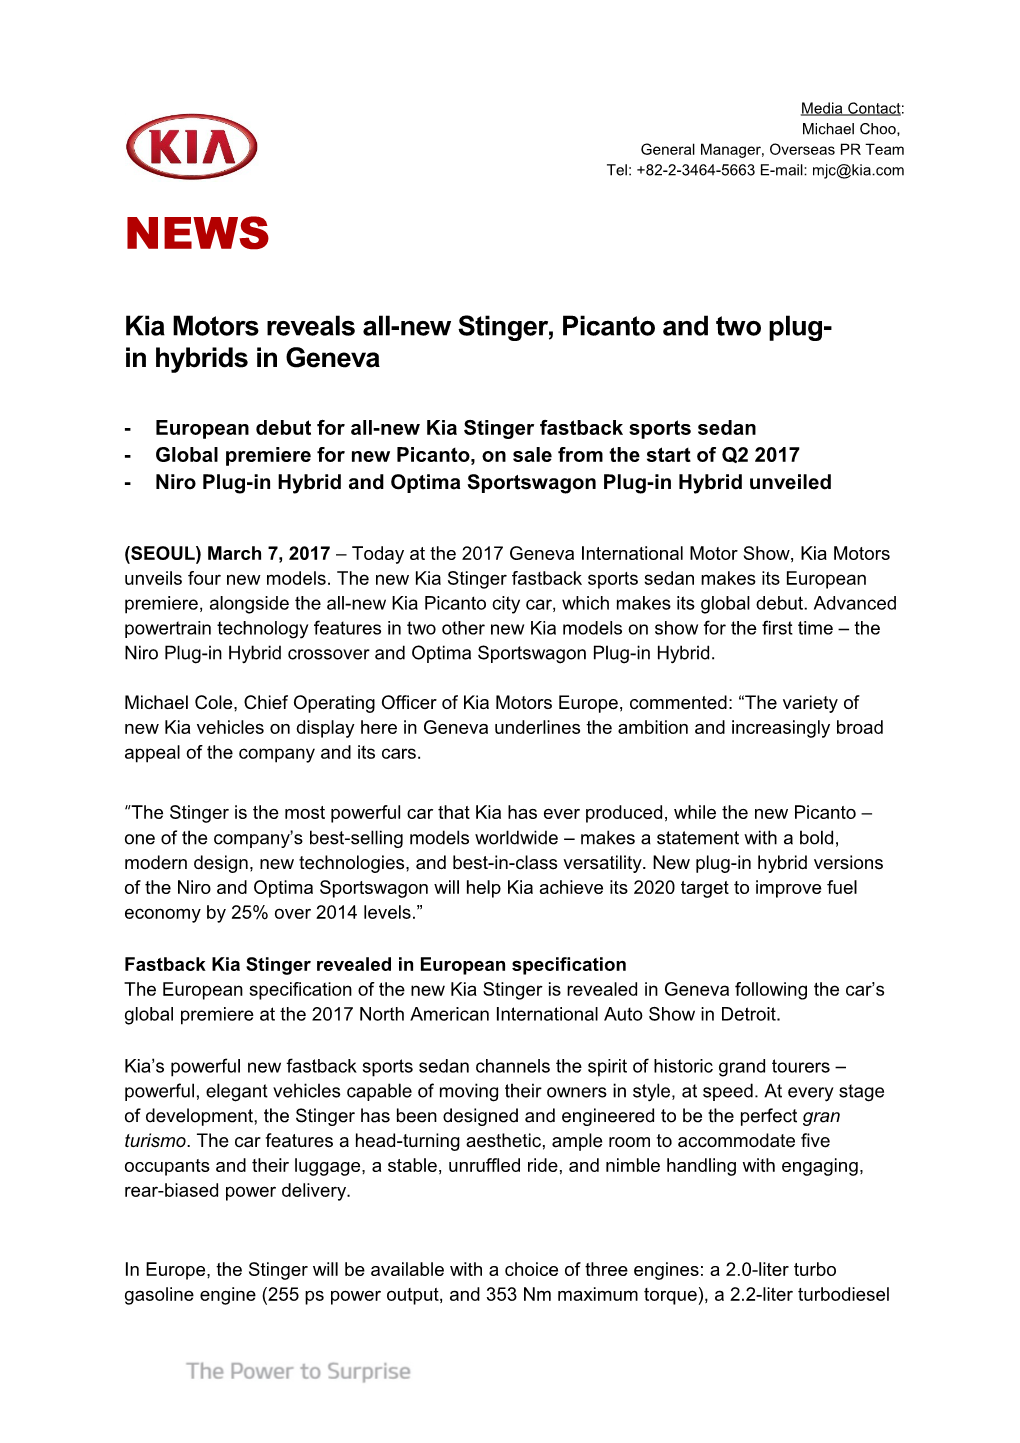 Kia Motors Reveals All-New Stinger, Picanto and Two Plug- in Hybrids in Geneva